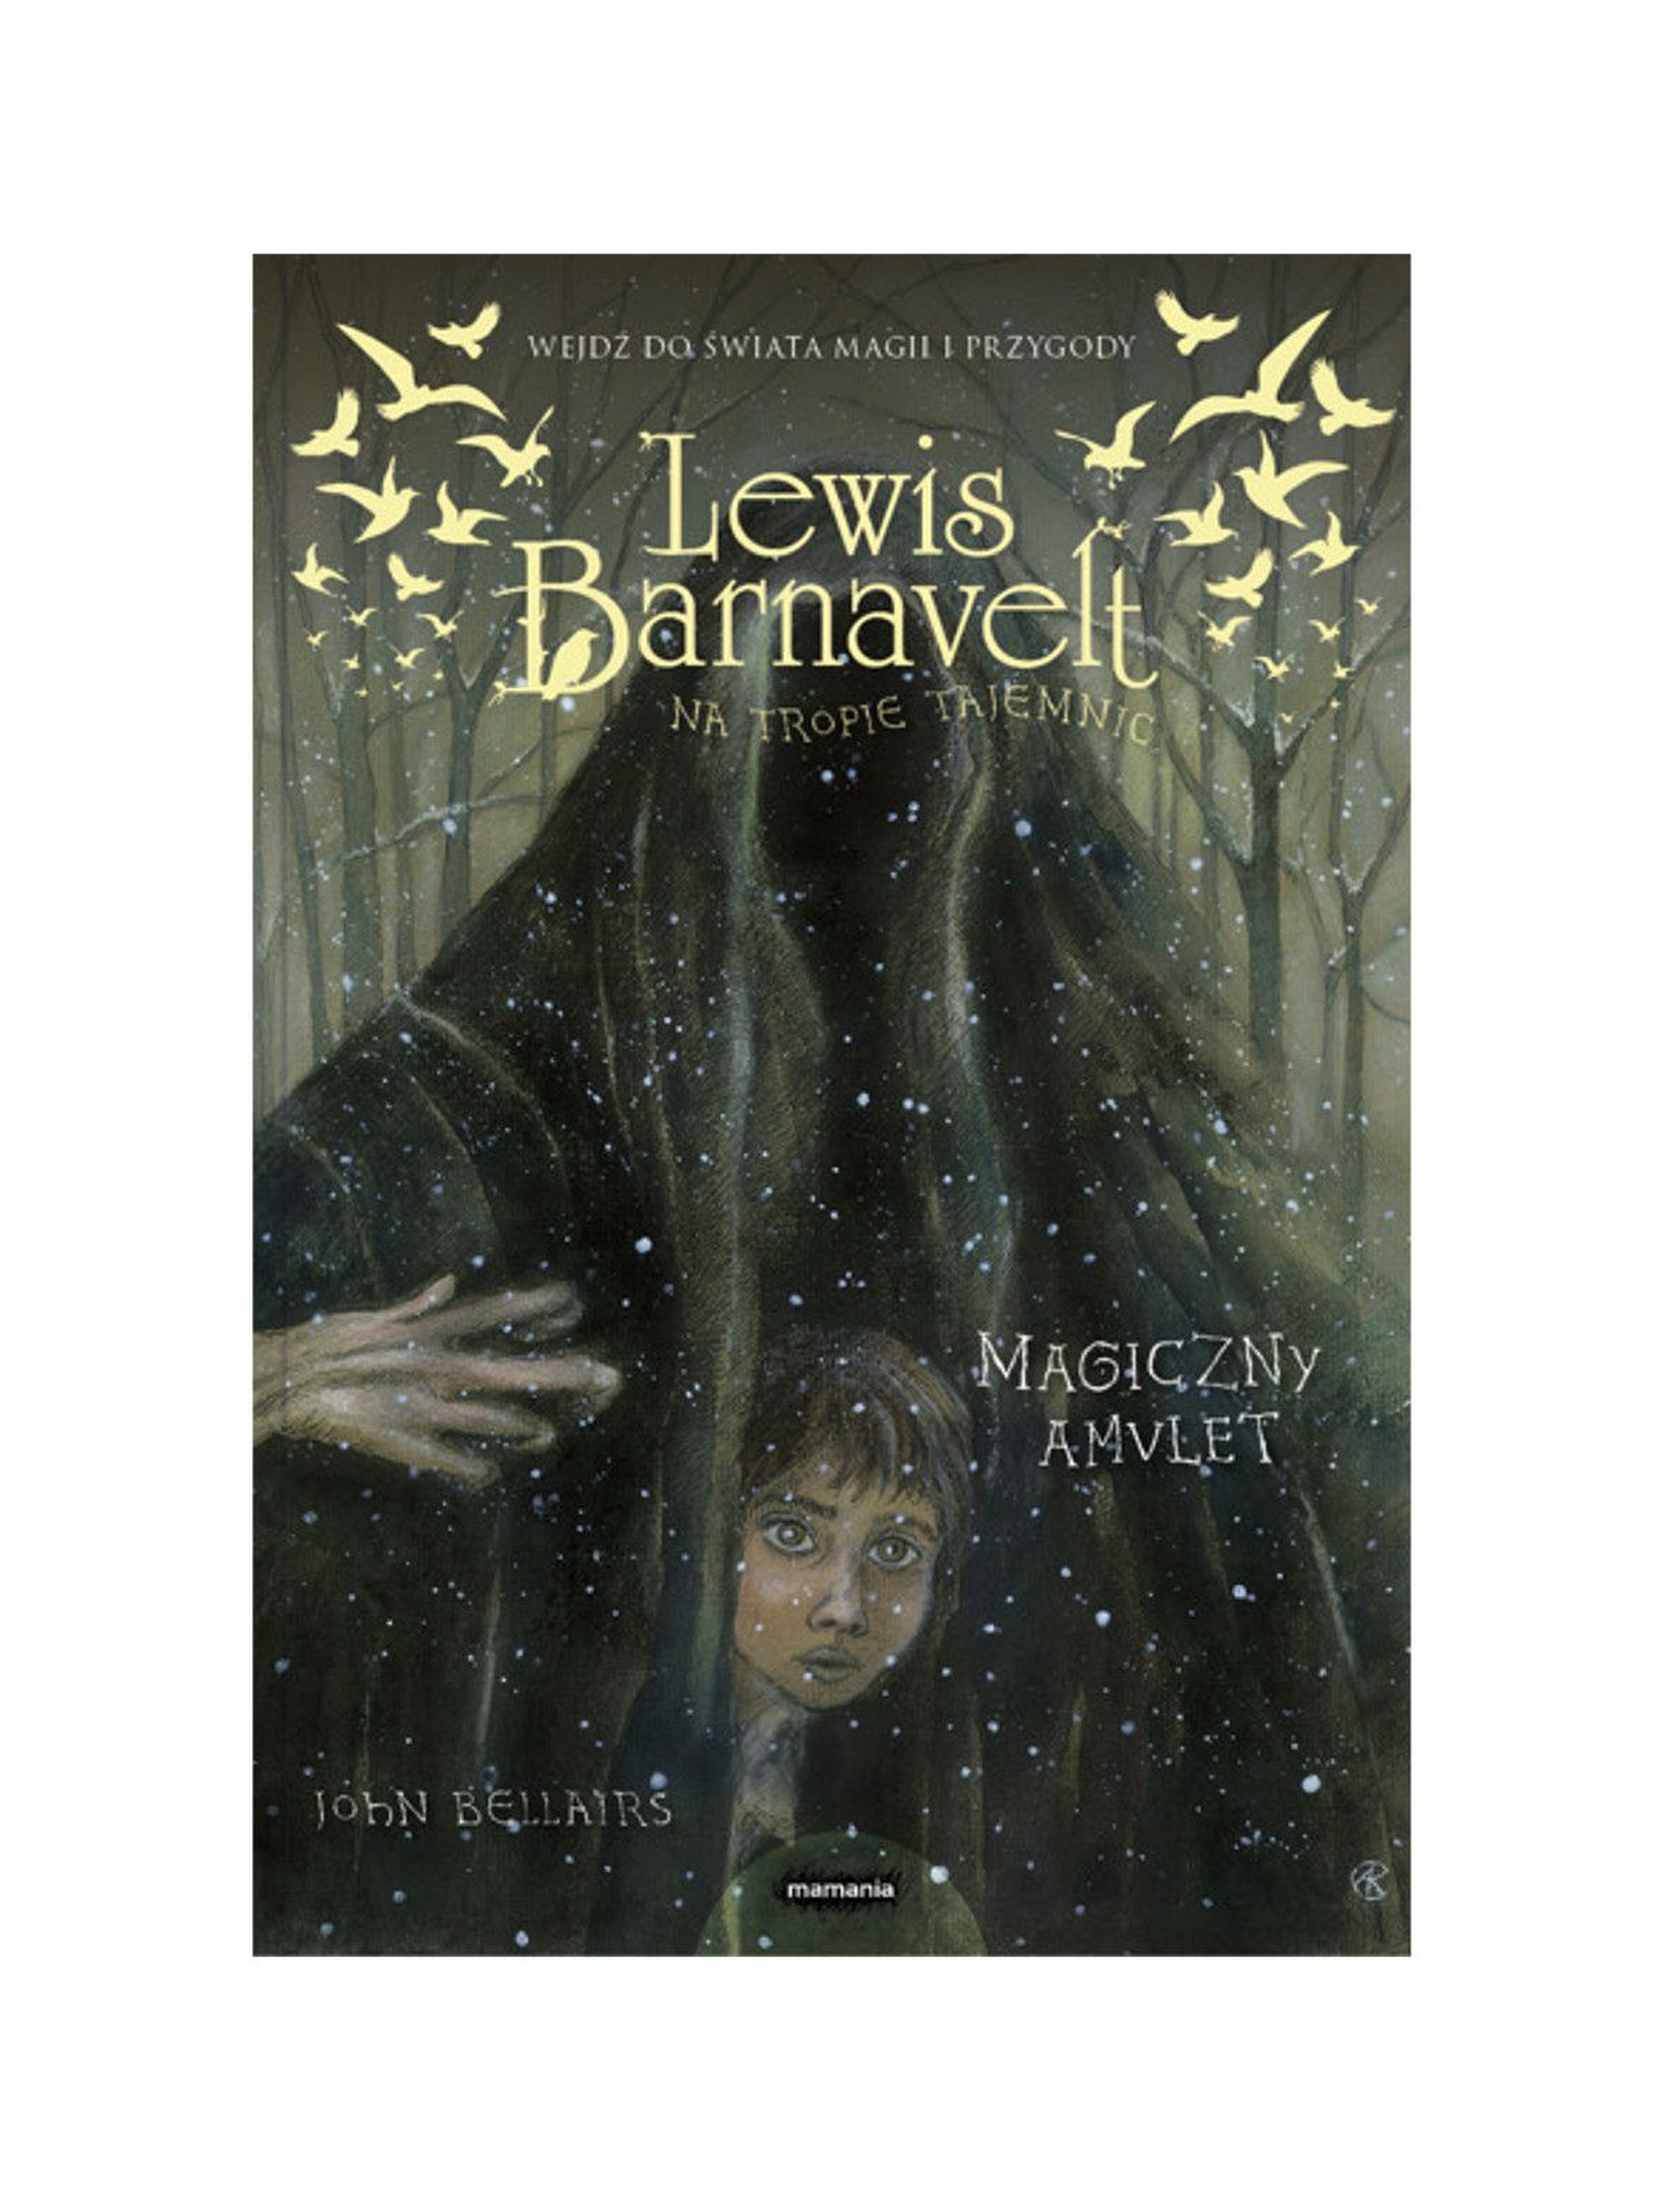 Książka "Lewis Barnavelt na tropie tajemnic. Magiczny amulet" L.Barnavelt